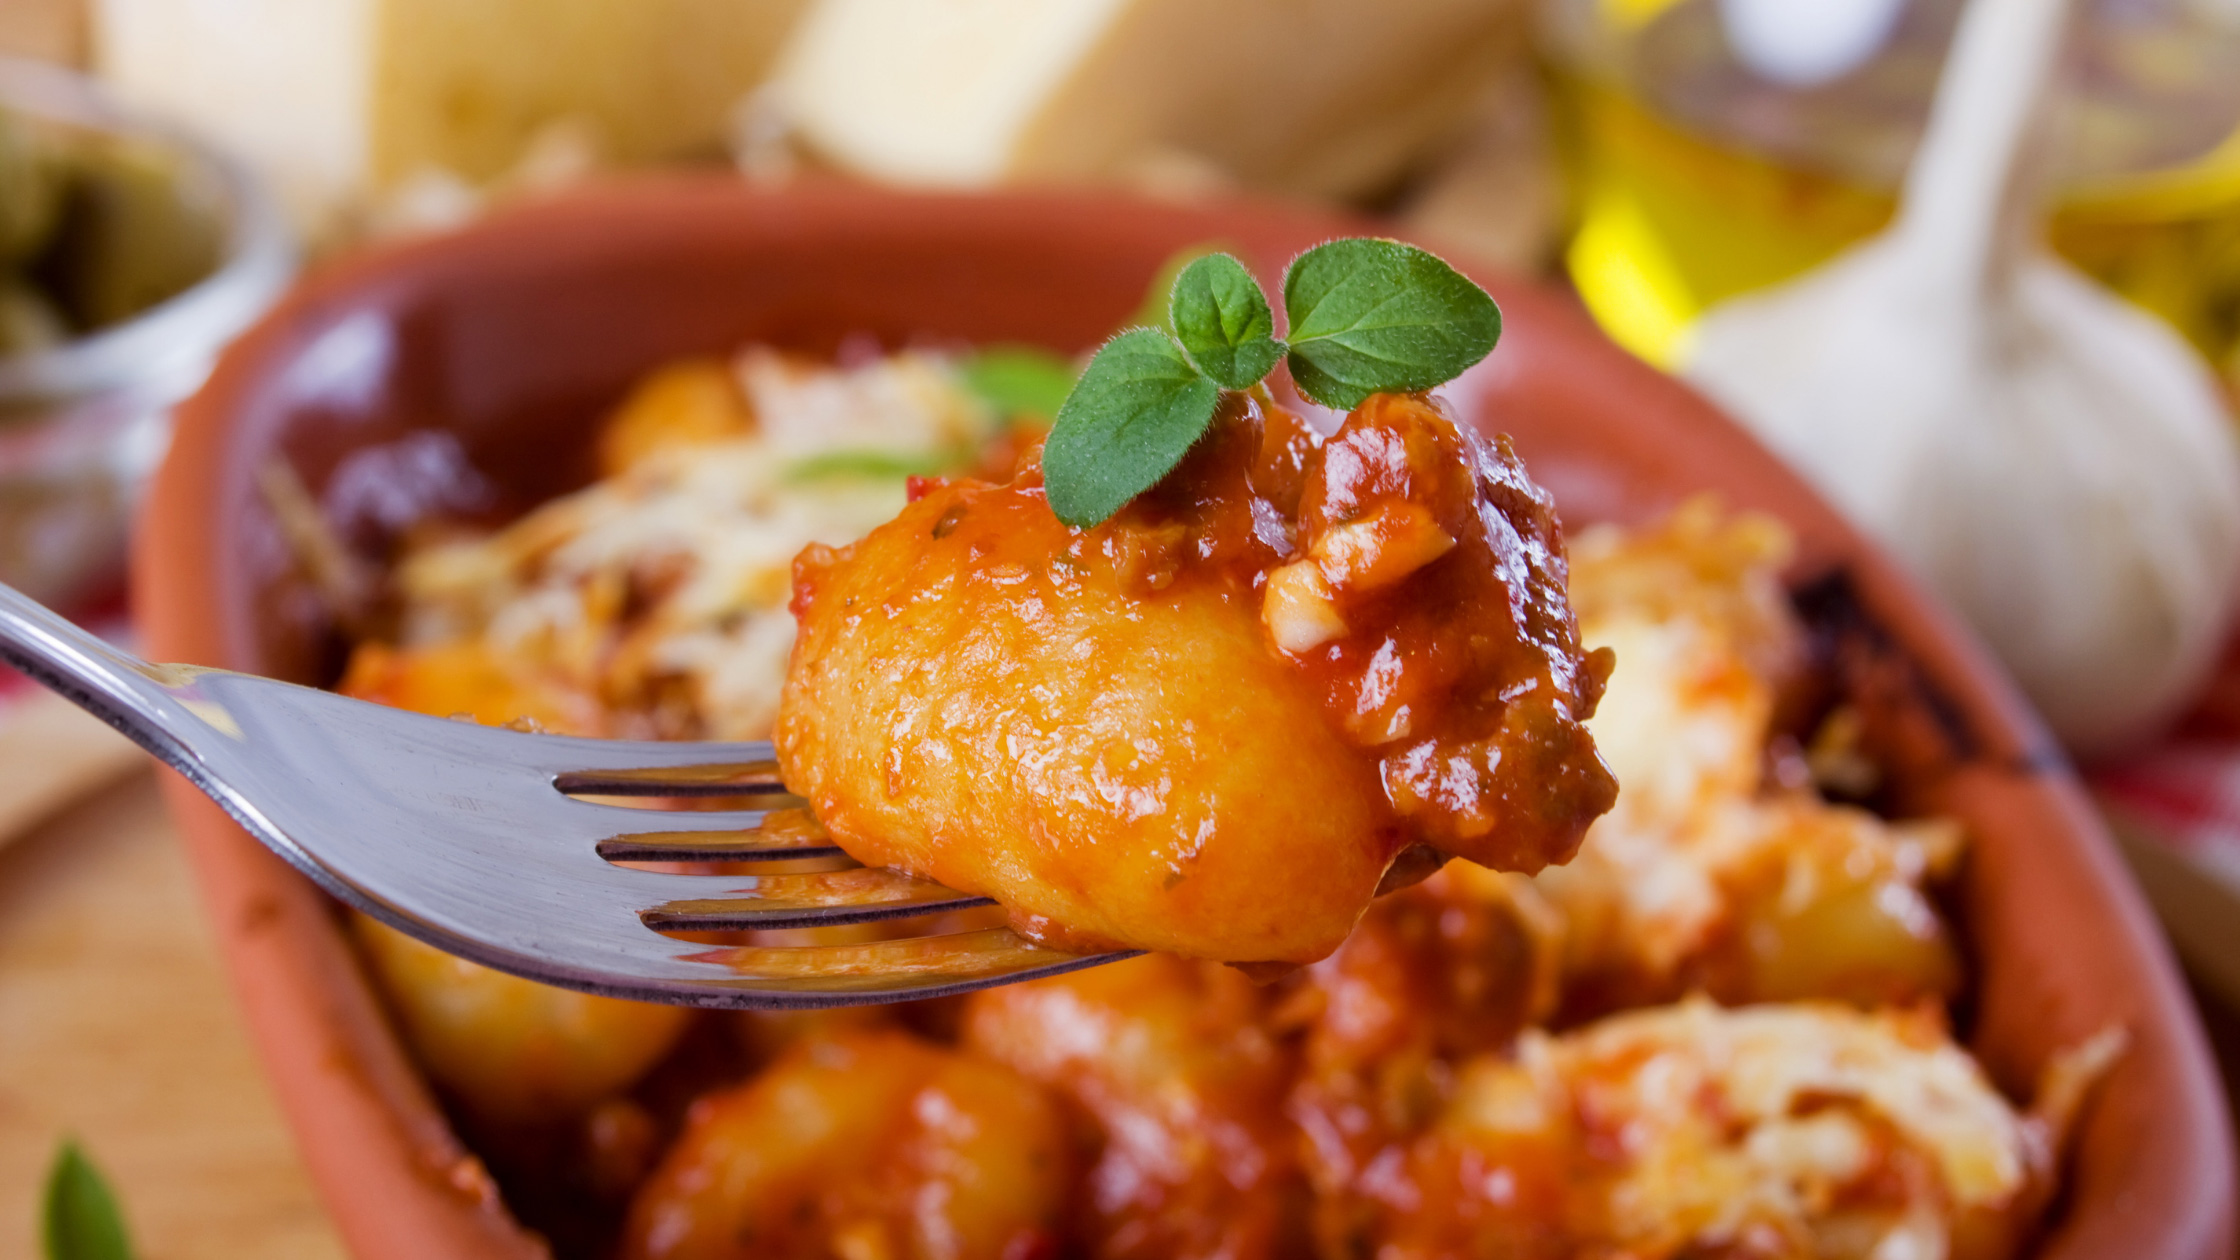 Gnocchi with tomato sauce at restaurant. Image - Canva 